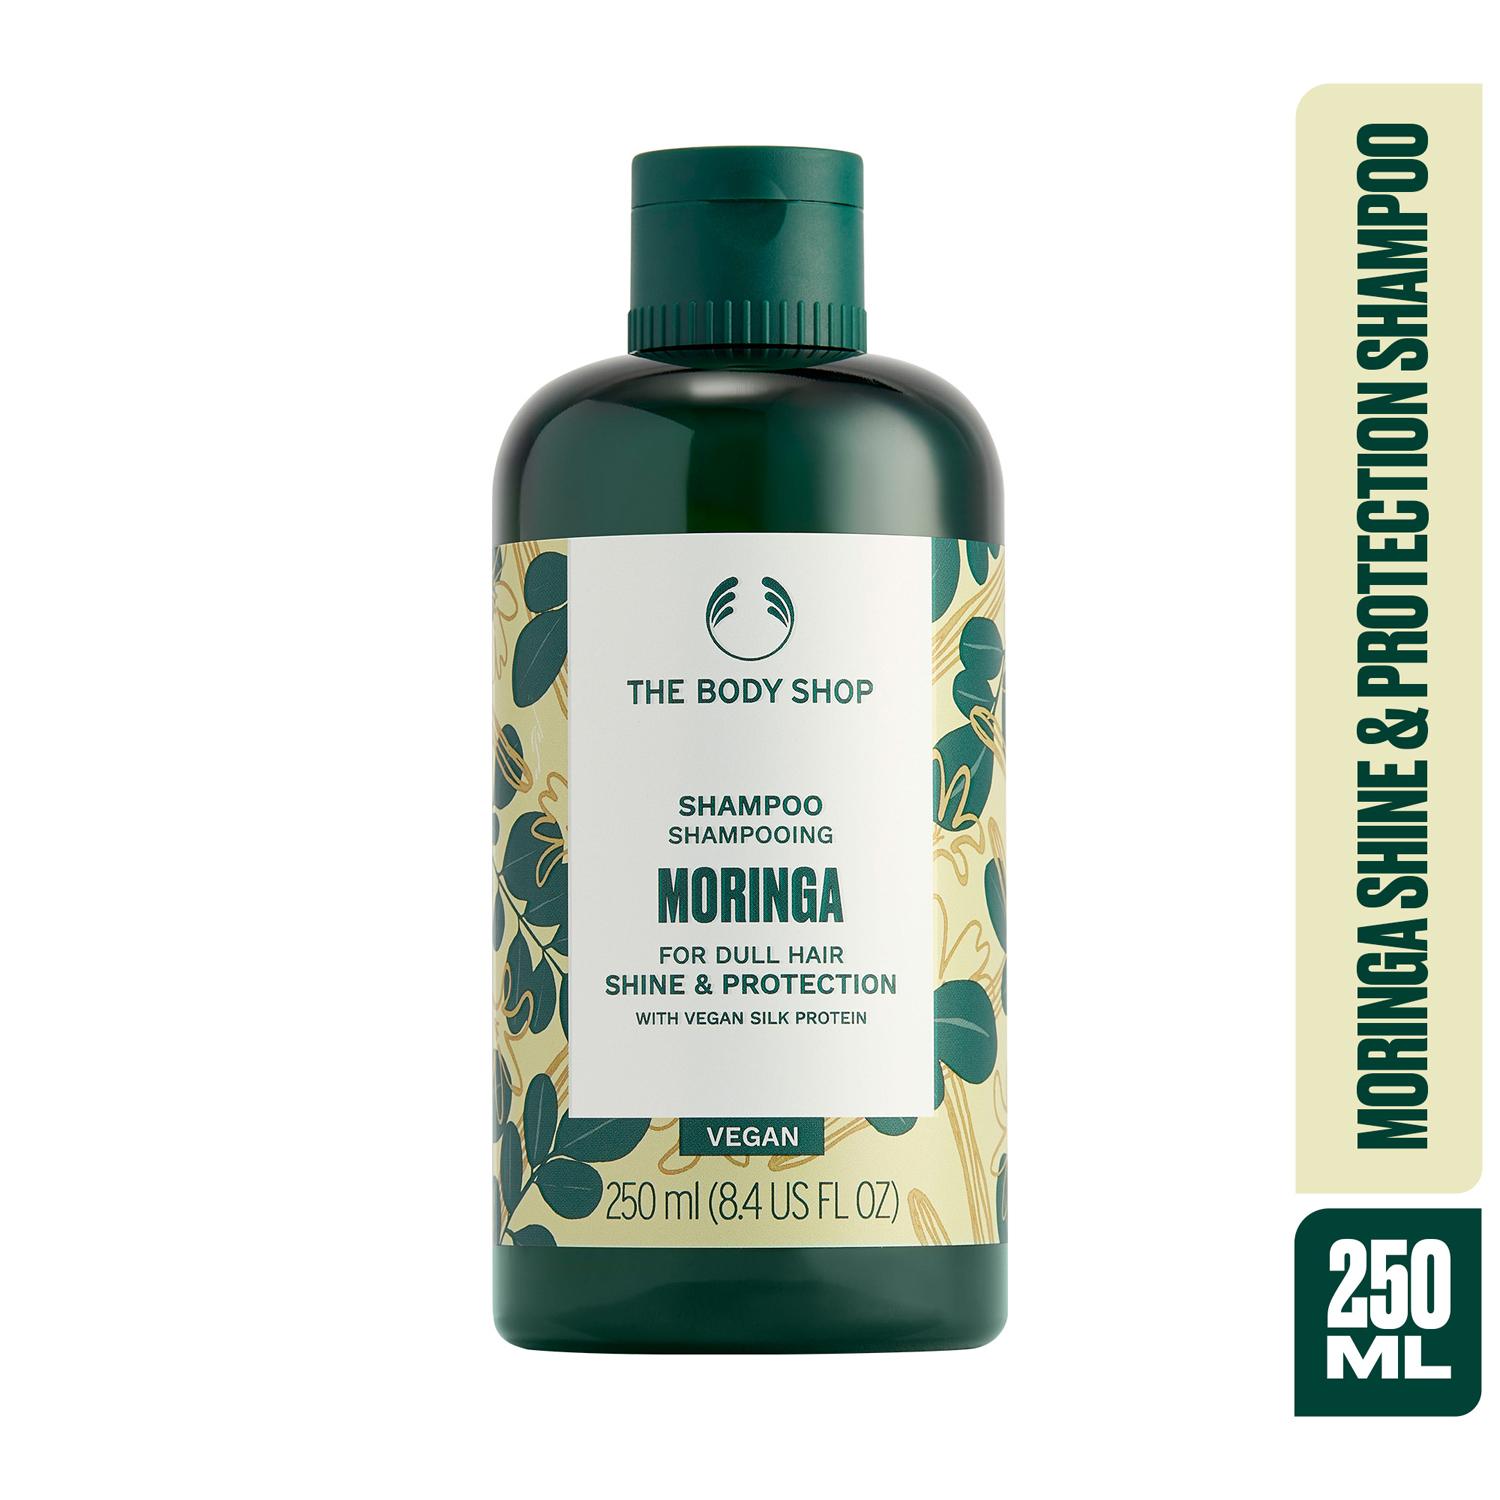 The Body Shop | The Body Shop Moringa Shine & Protection Shampoo (250ml)